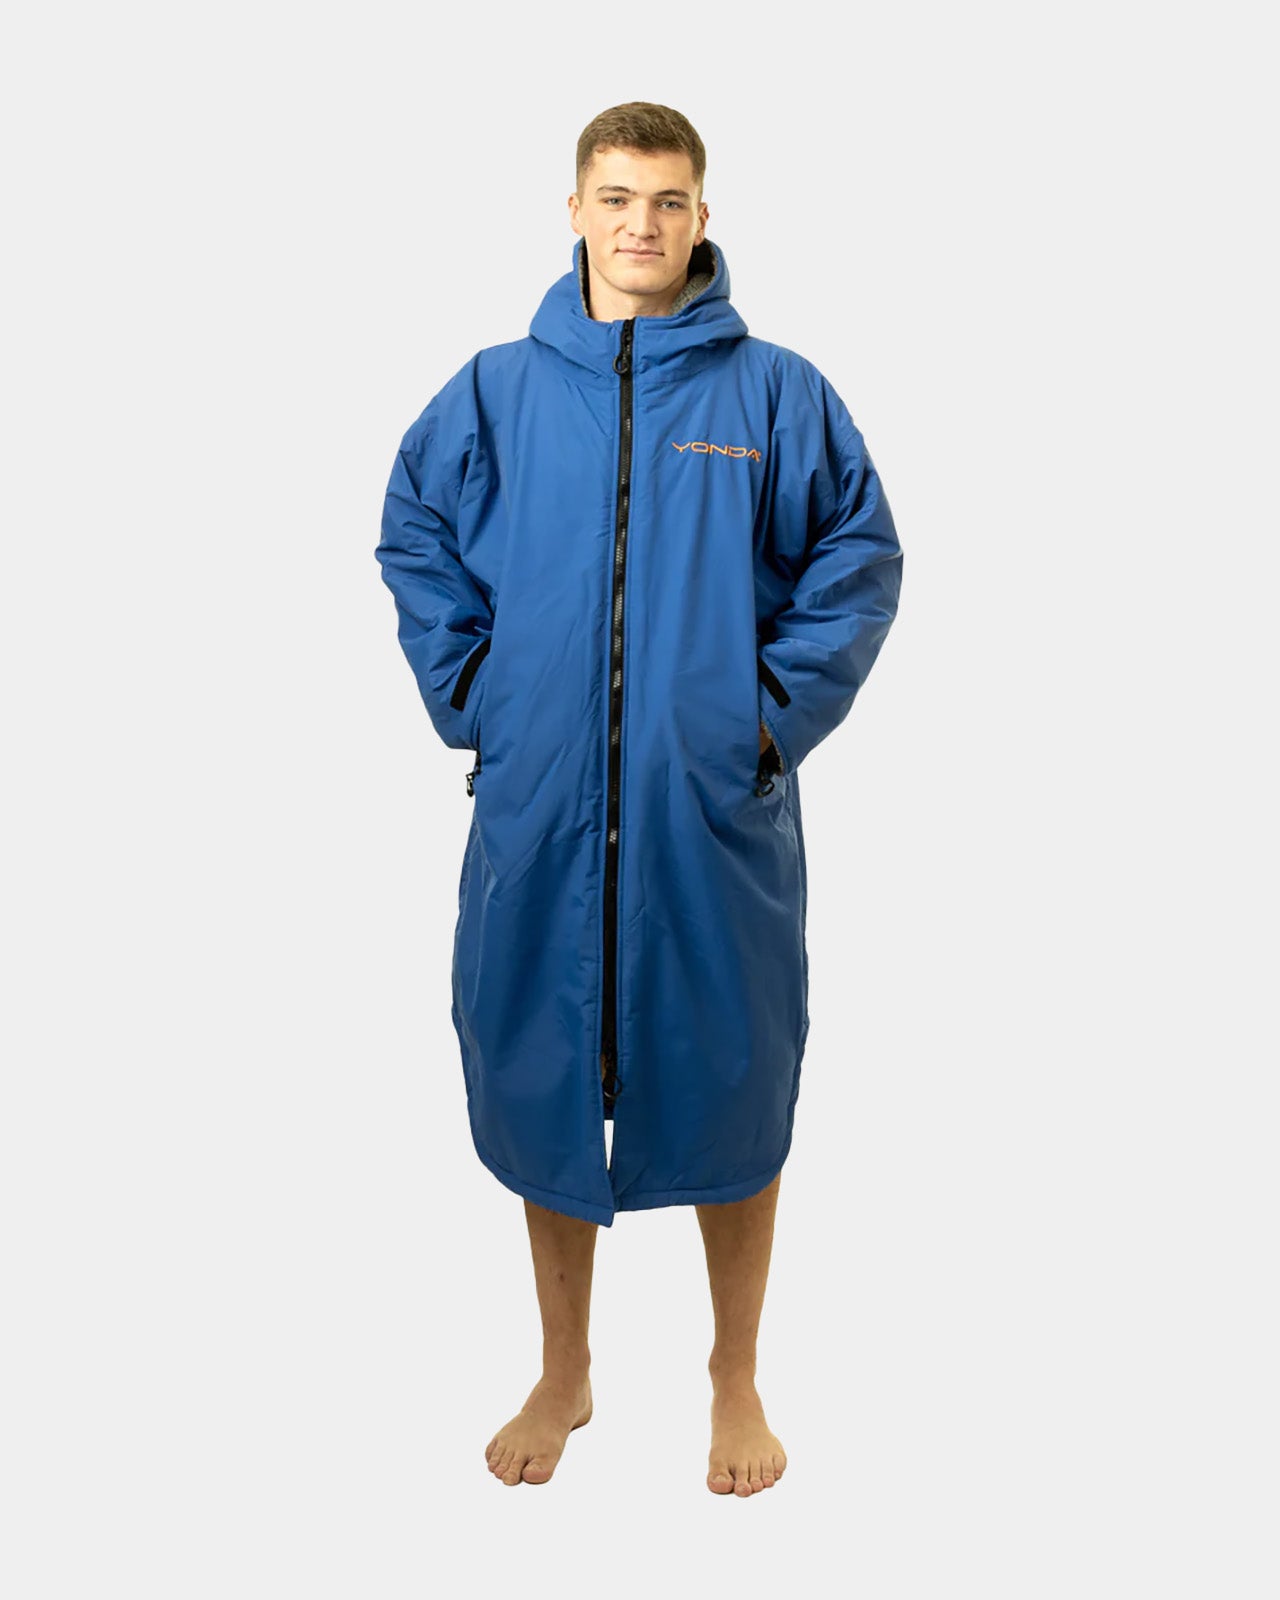 YONDA Waterproof Long Sleeve Changing Robe